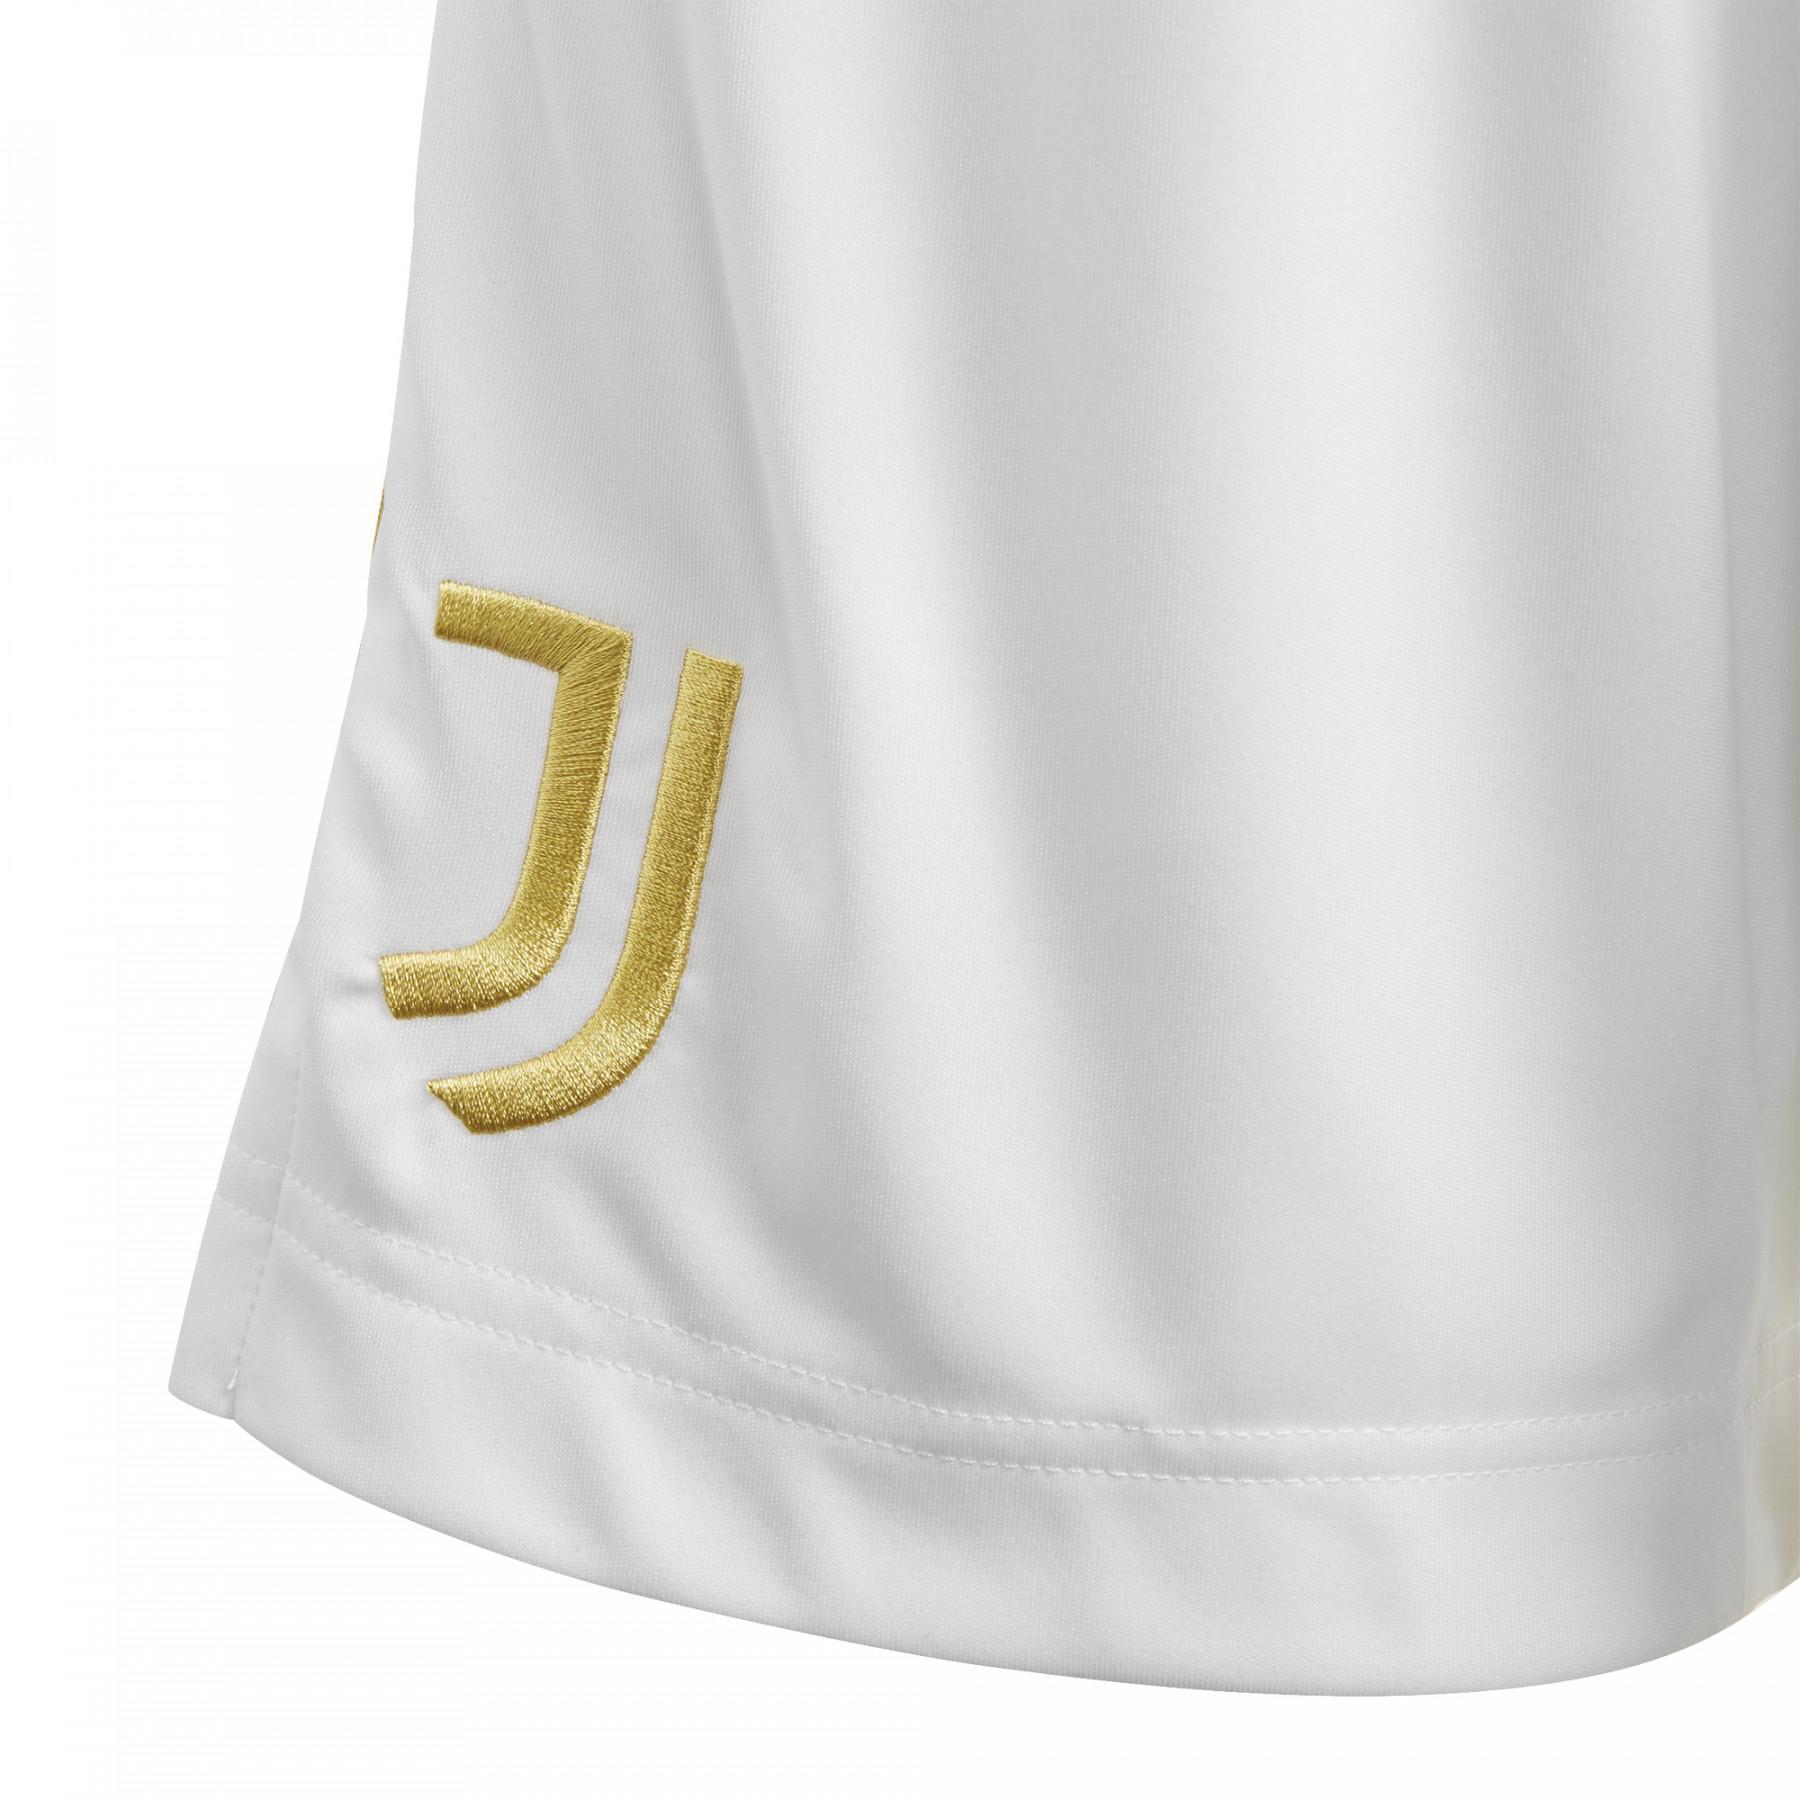 Barnens hem shorts Juventus 2020/21